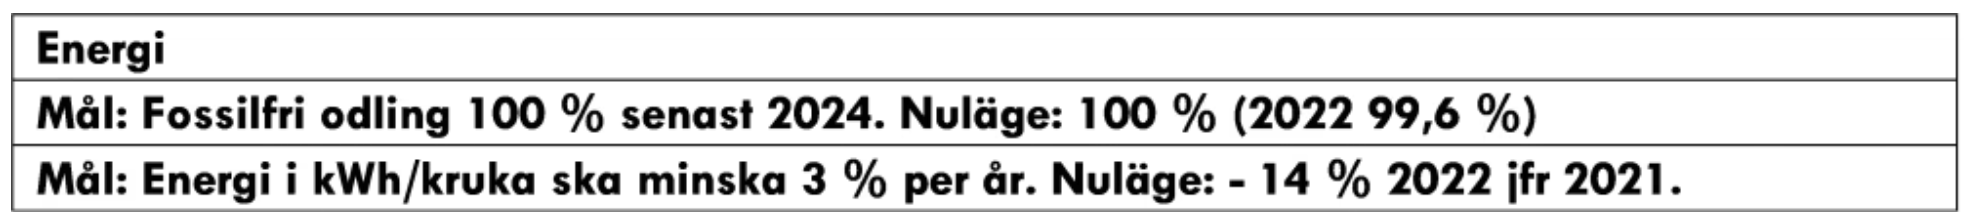 Svegros energimål i tabell.